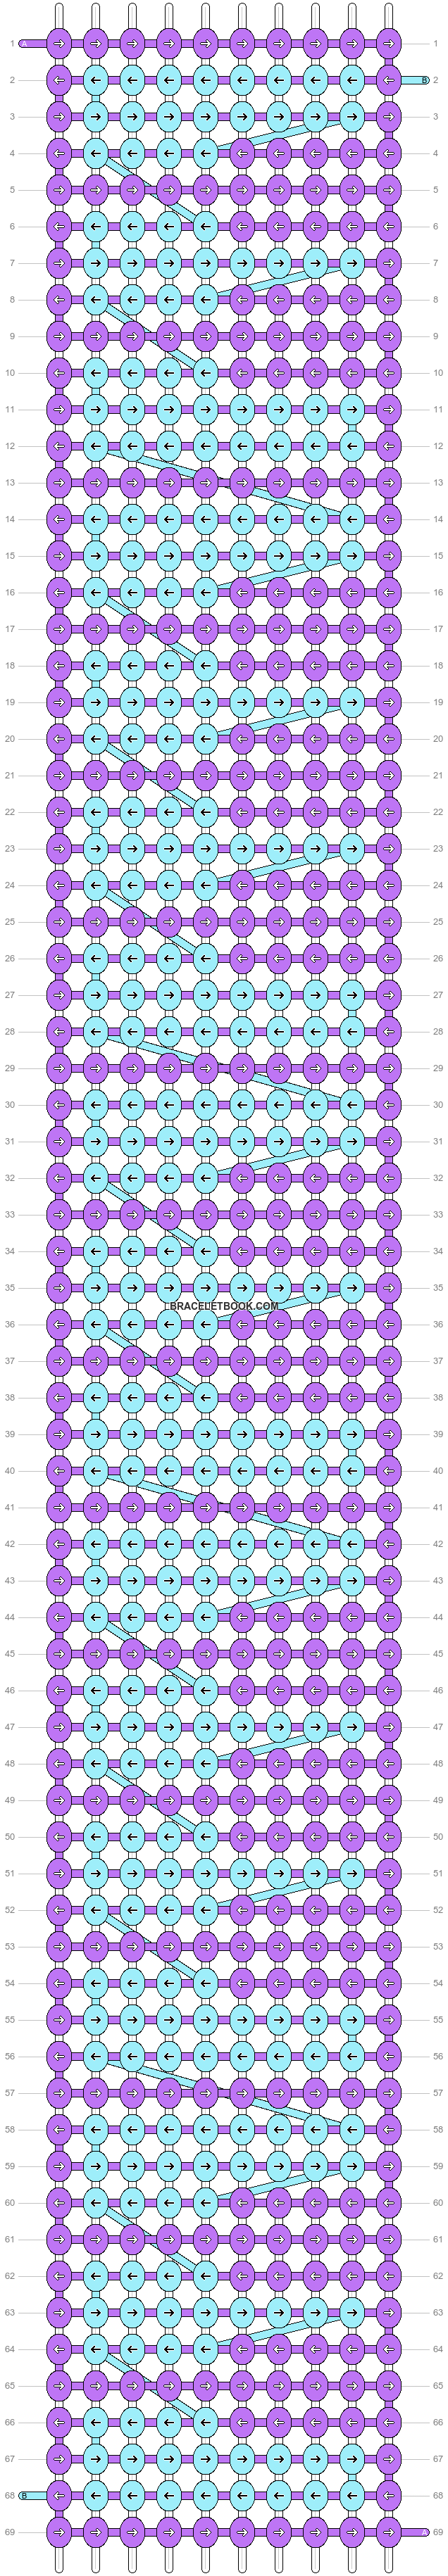 Alpha pattern #28430 variation #15327 pattern